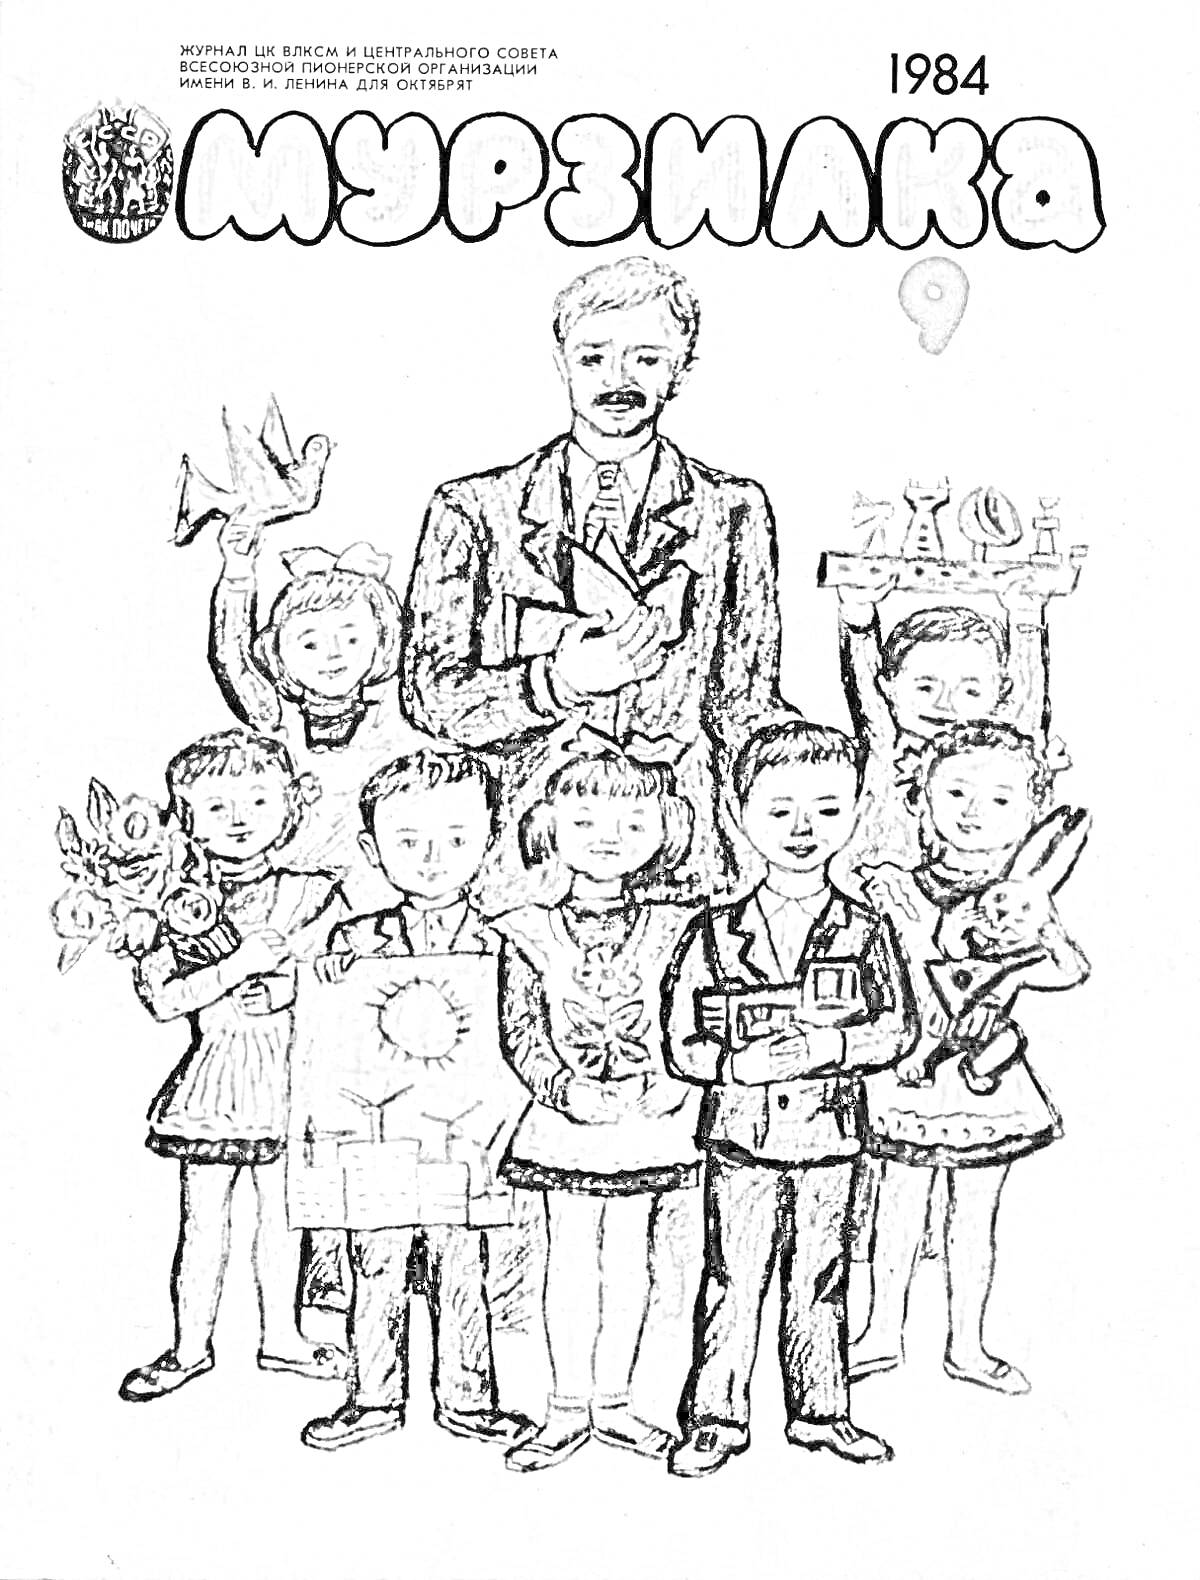 Мужчина и пятеро детей с цветами, игрушками и книгами на фоне обложки журнала